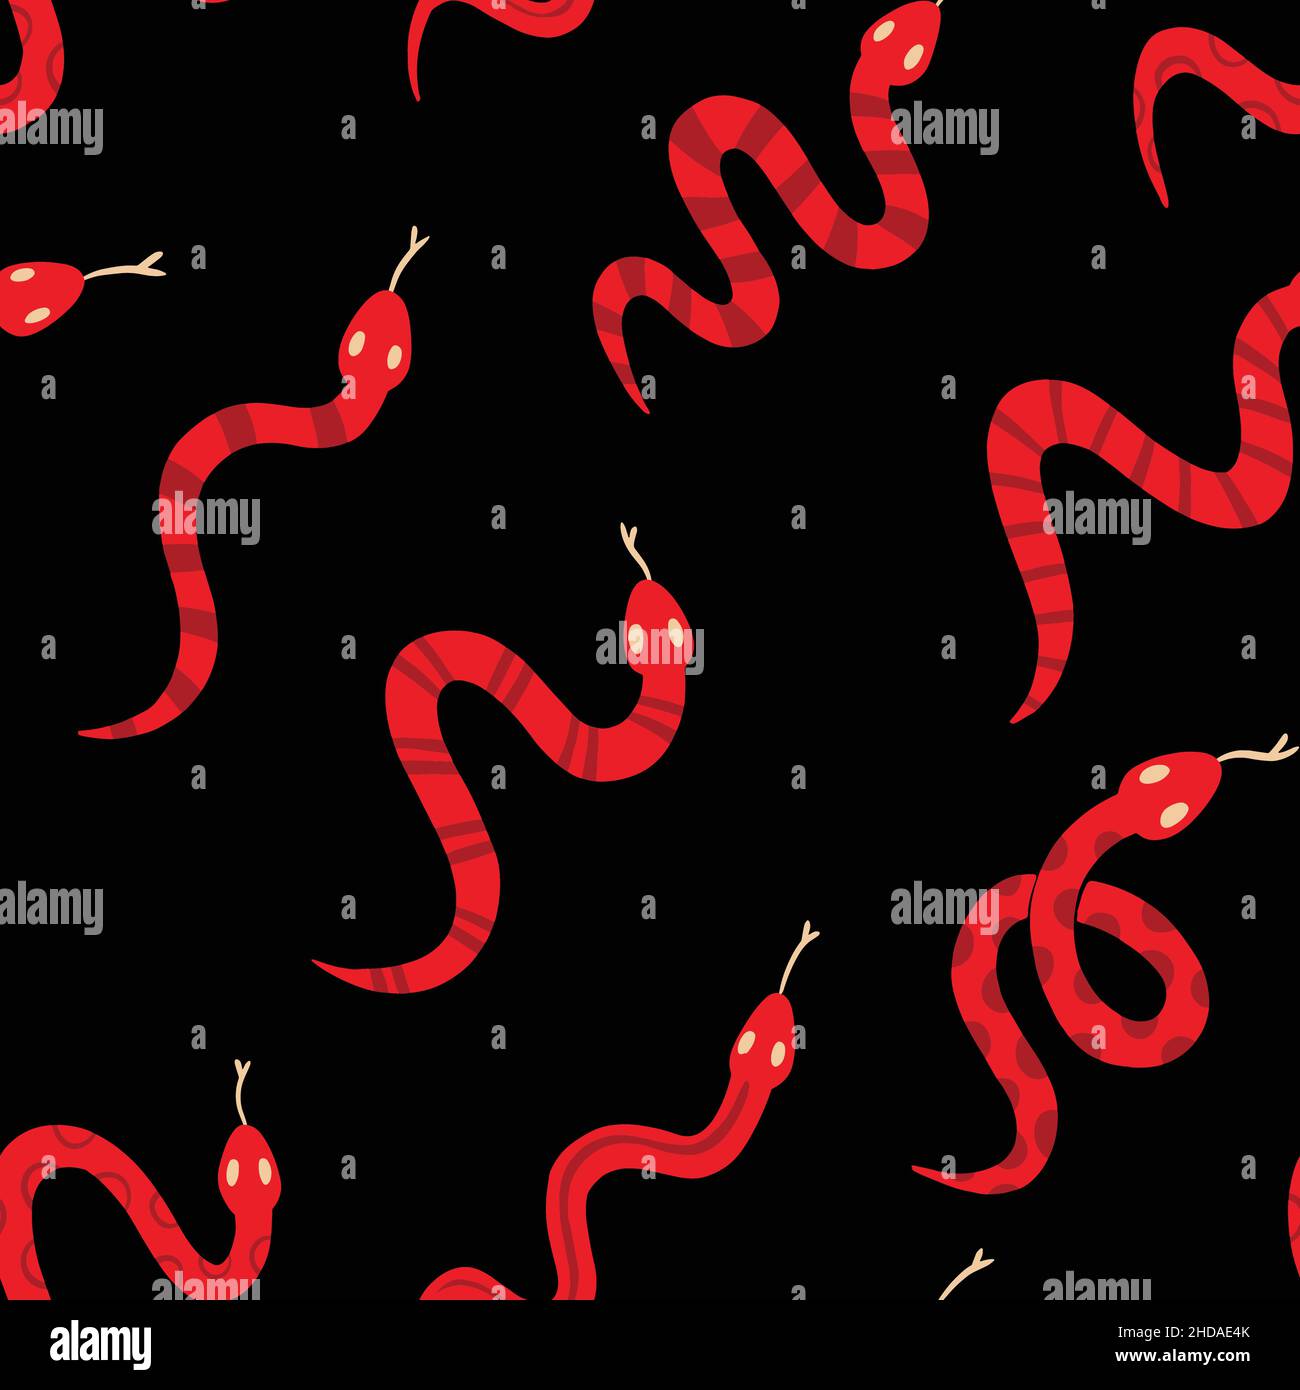 Coral snake doodle seamless pattern. Digital Illustration Background Stock Vector